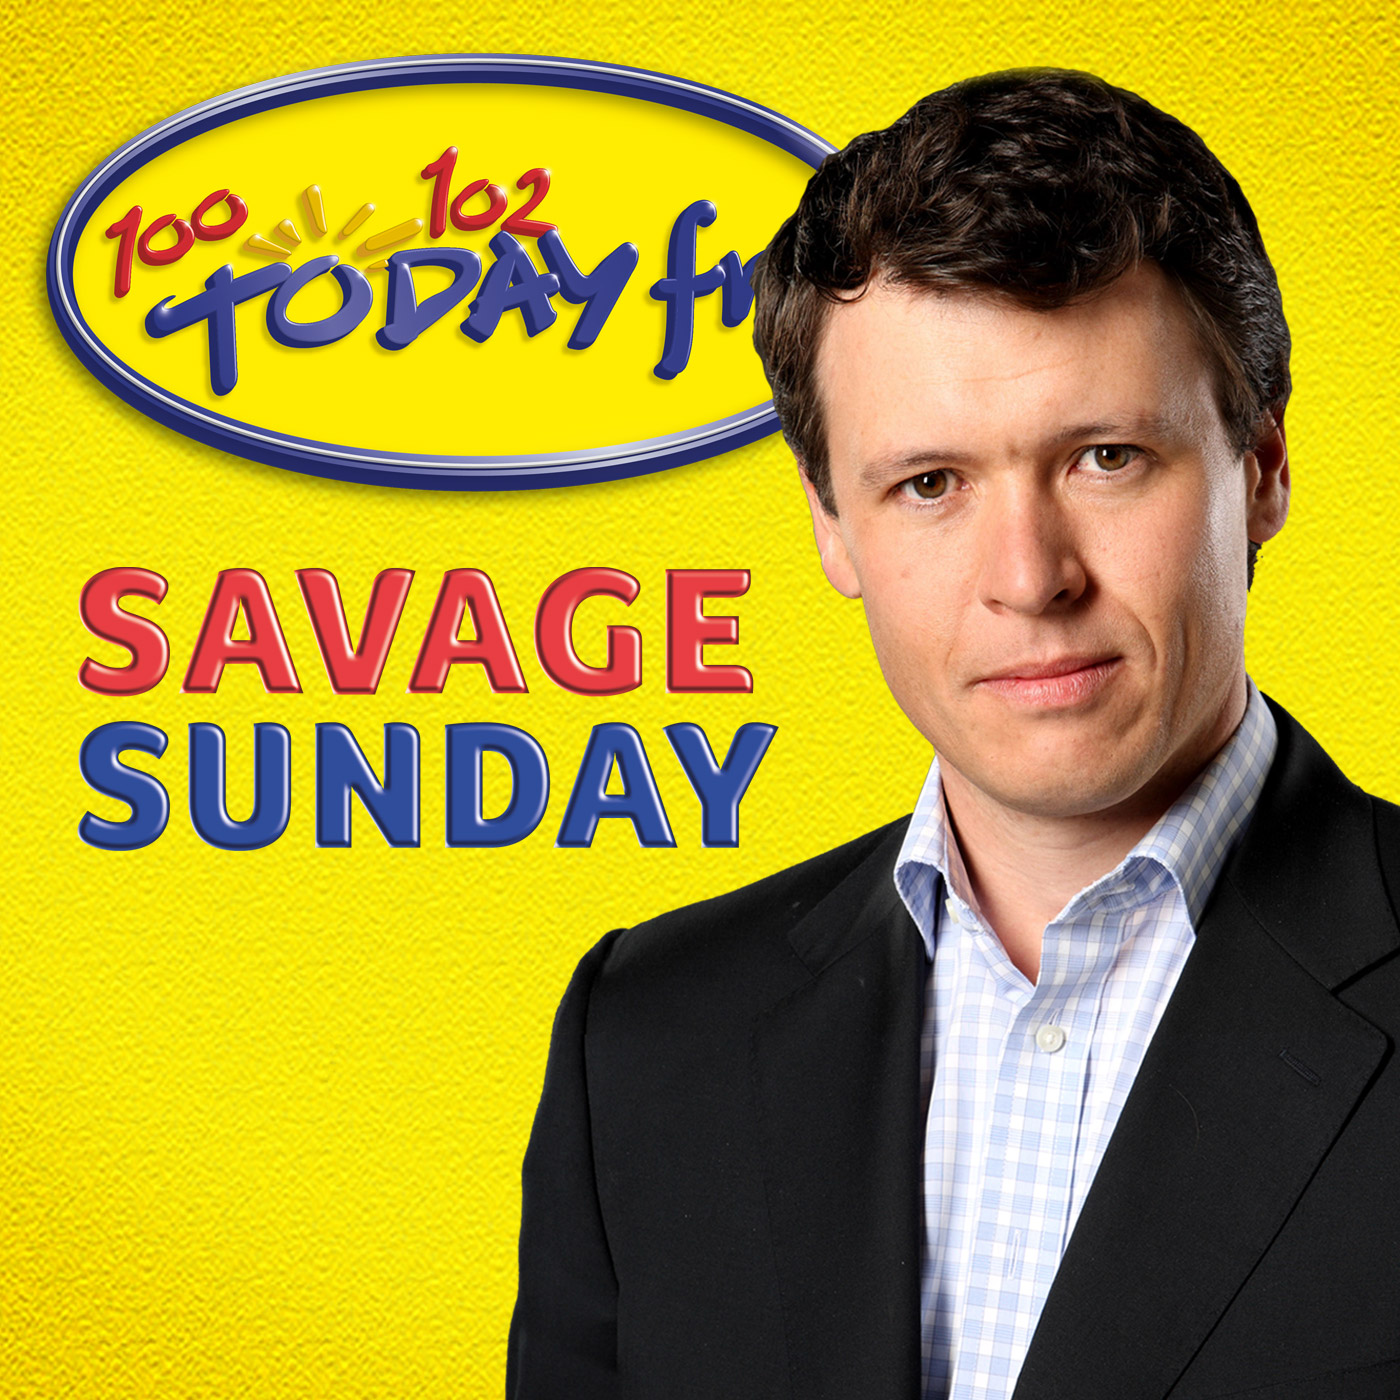 SGI’s Brendan Condren and Eimear O’Grady in conversation with Anton Savage on “Savage Sunday”, Today Fm.